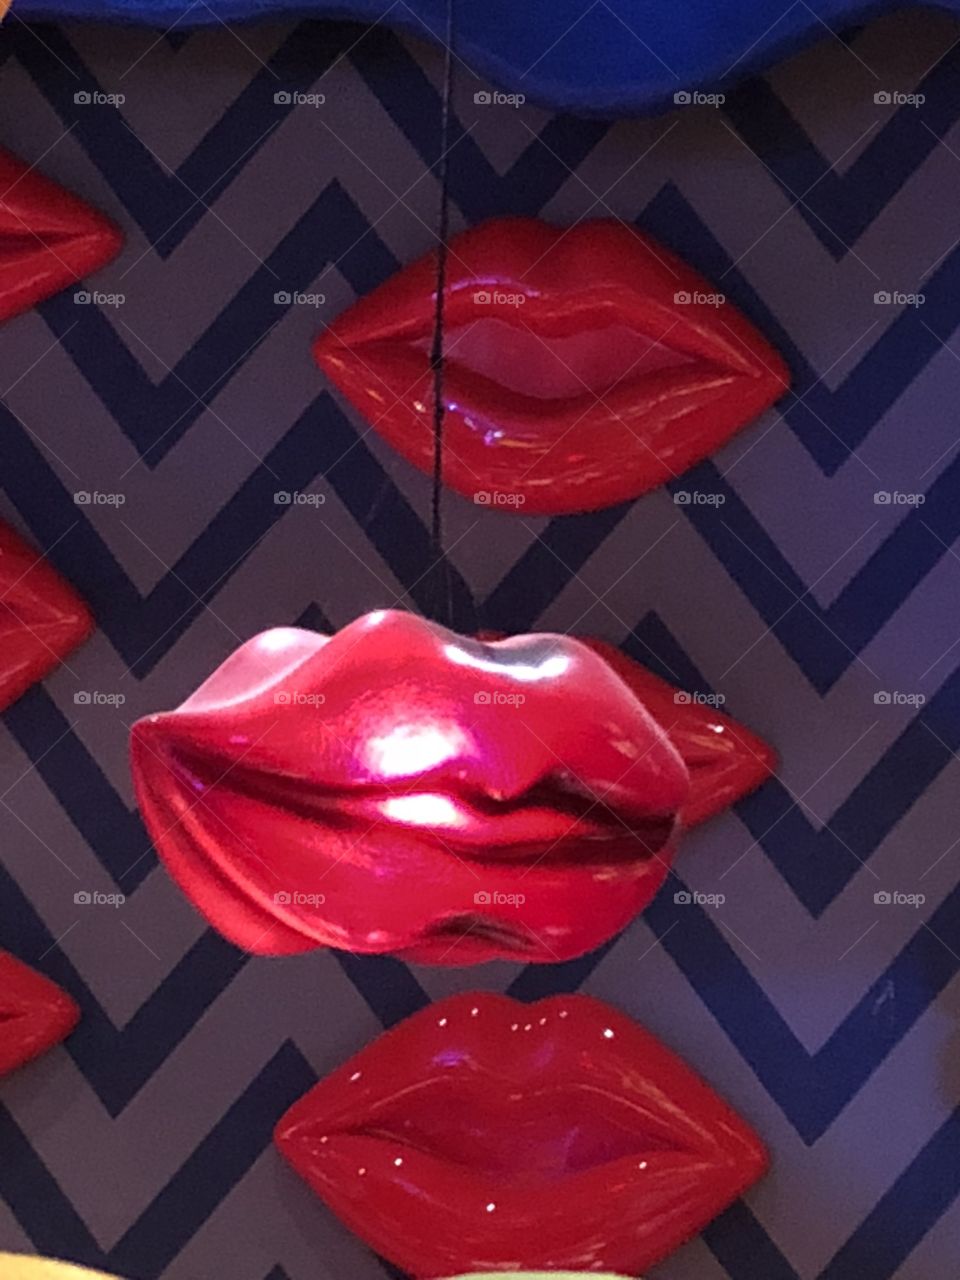 Lips on wall